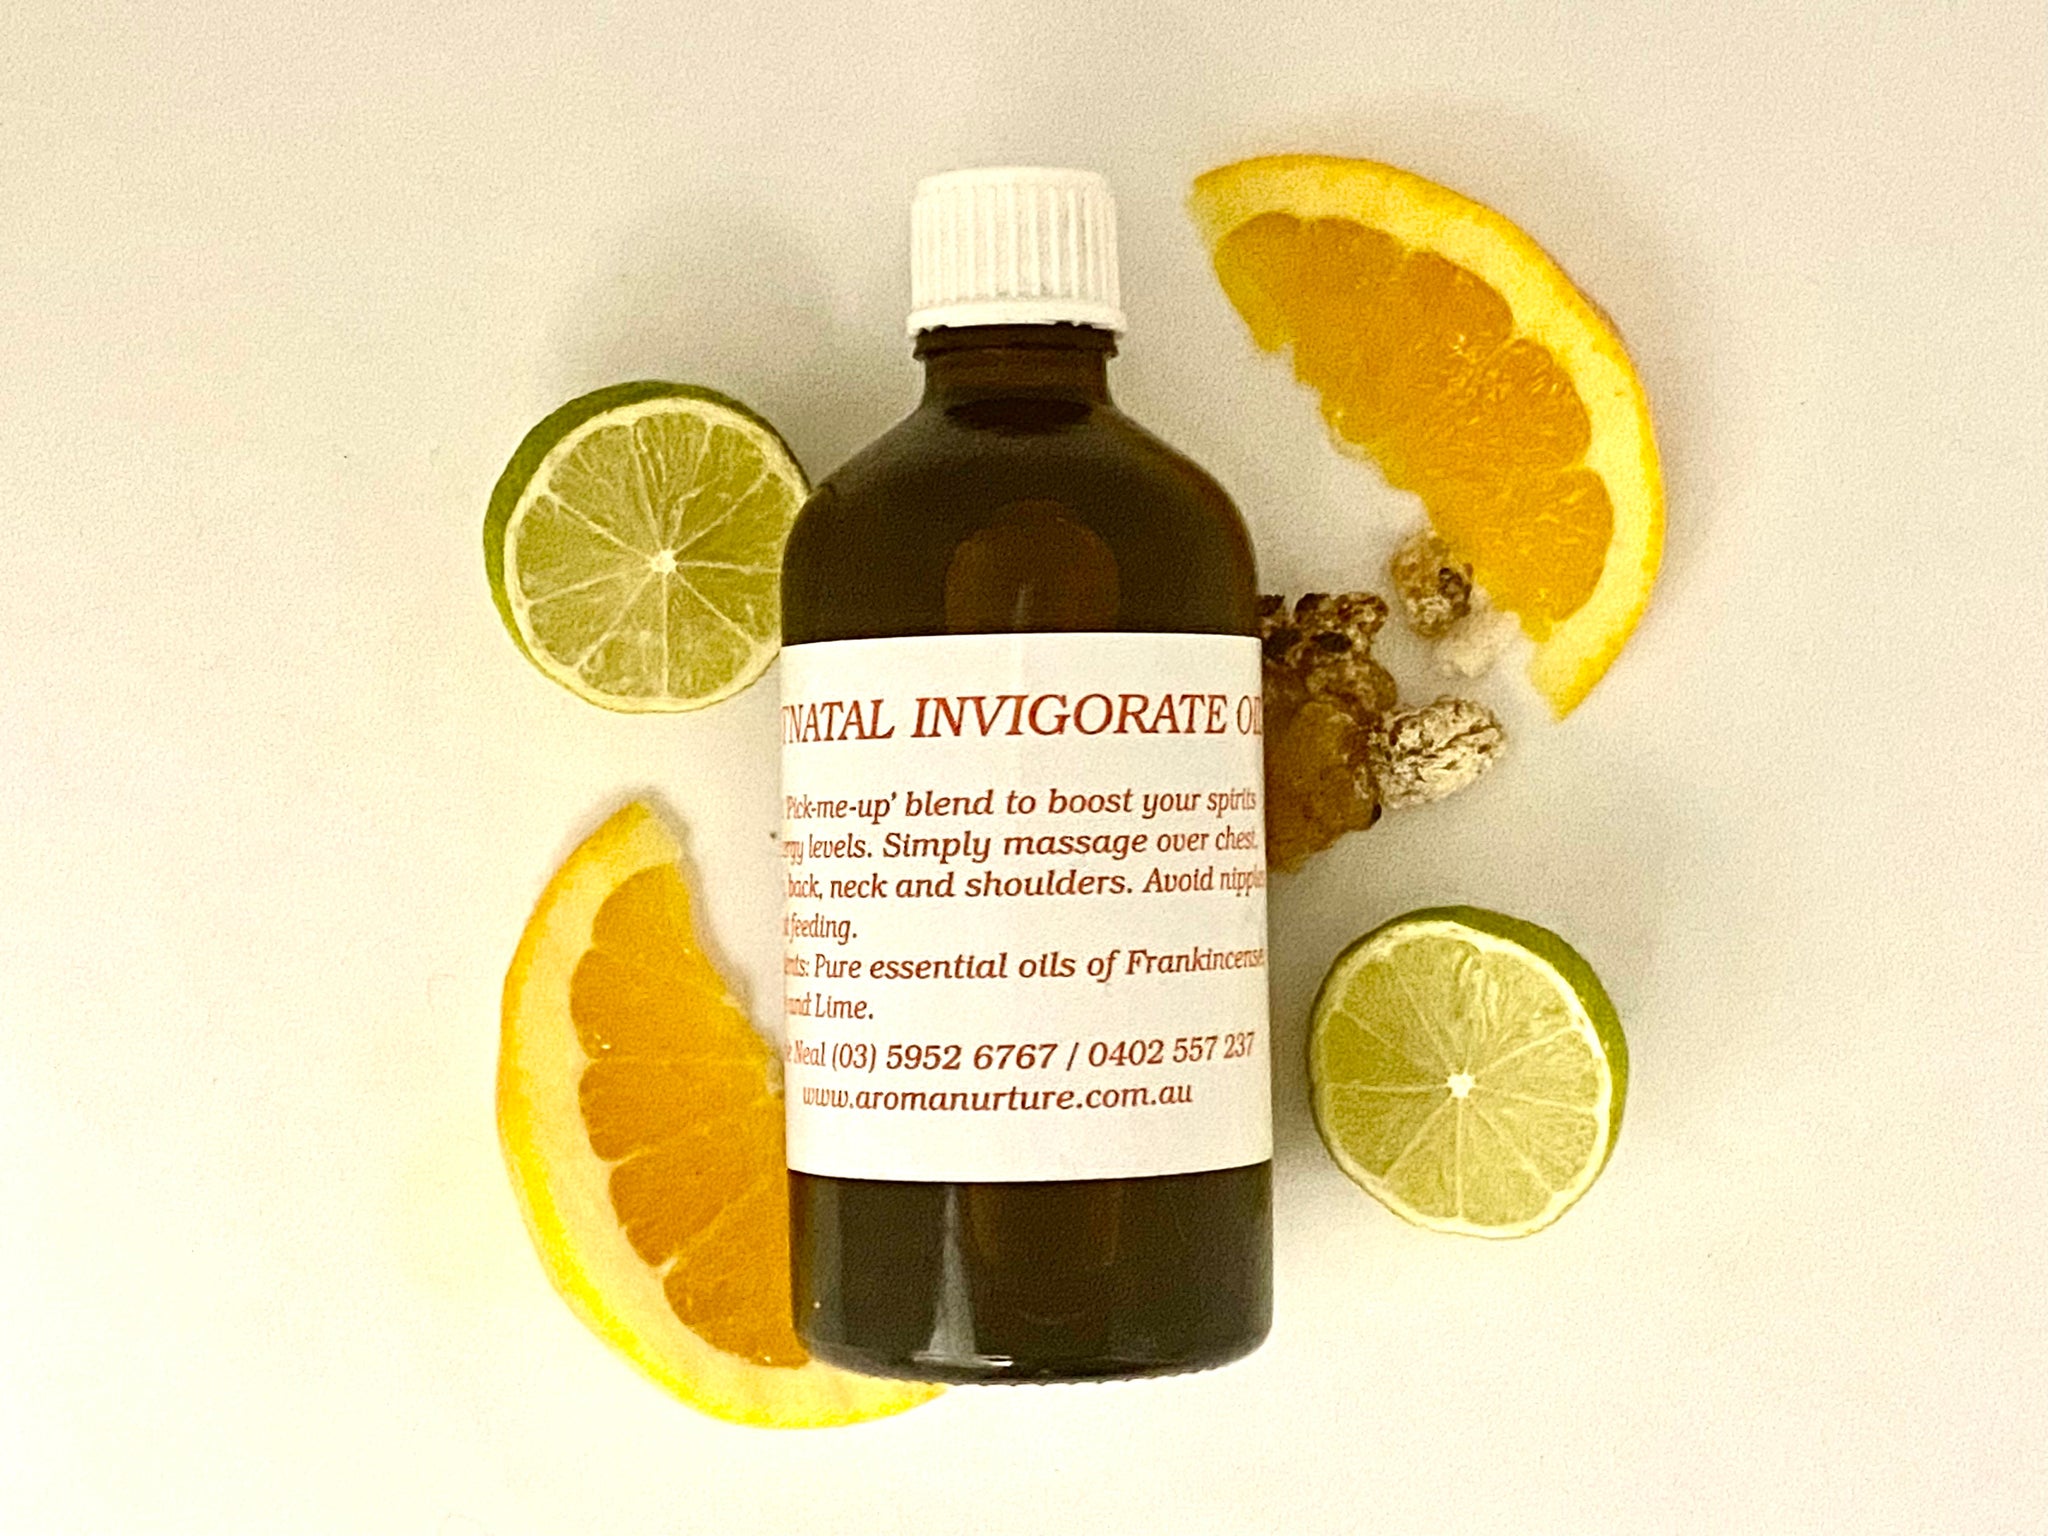 Postnatal Invigorate Massage Oil in Light Olive Oil. 100 mls.